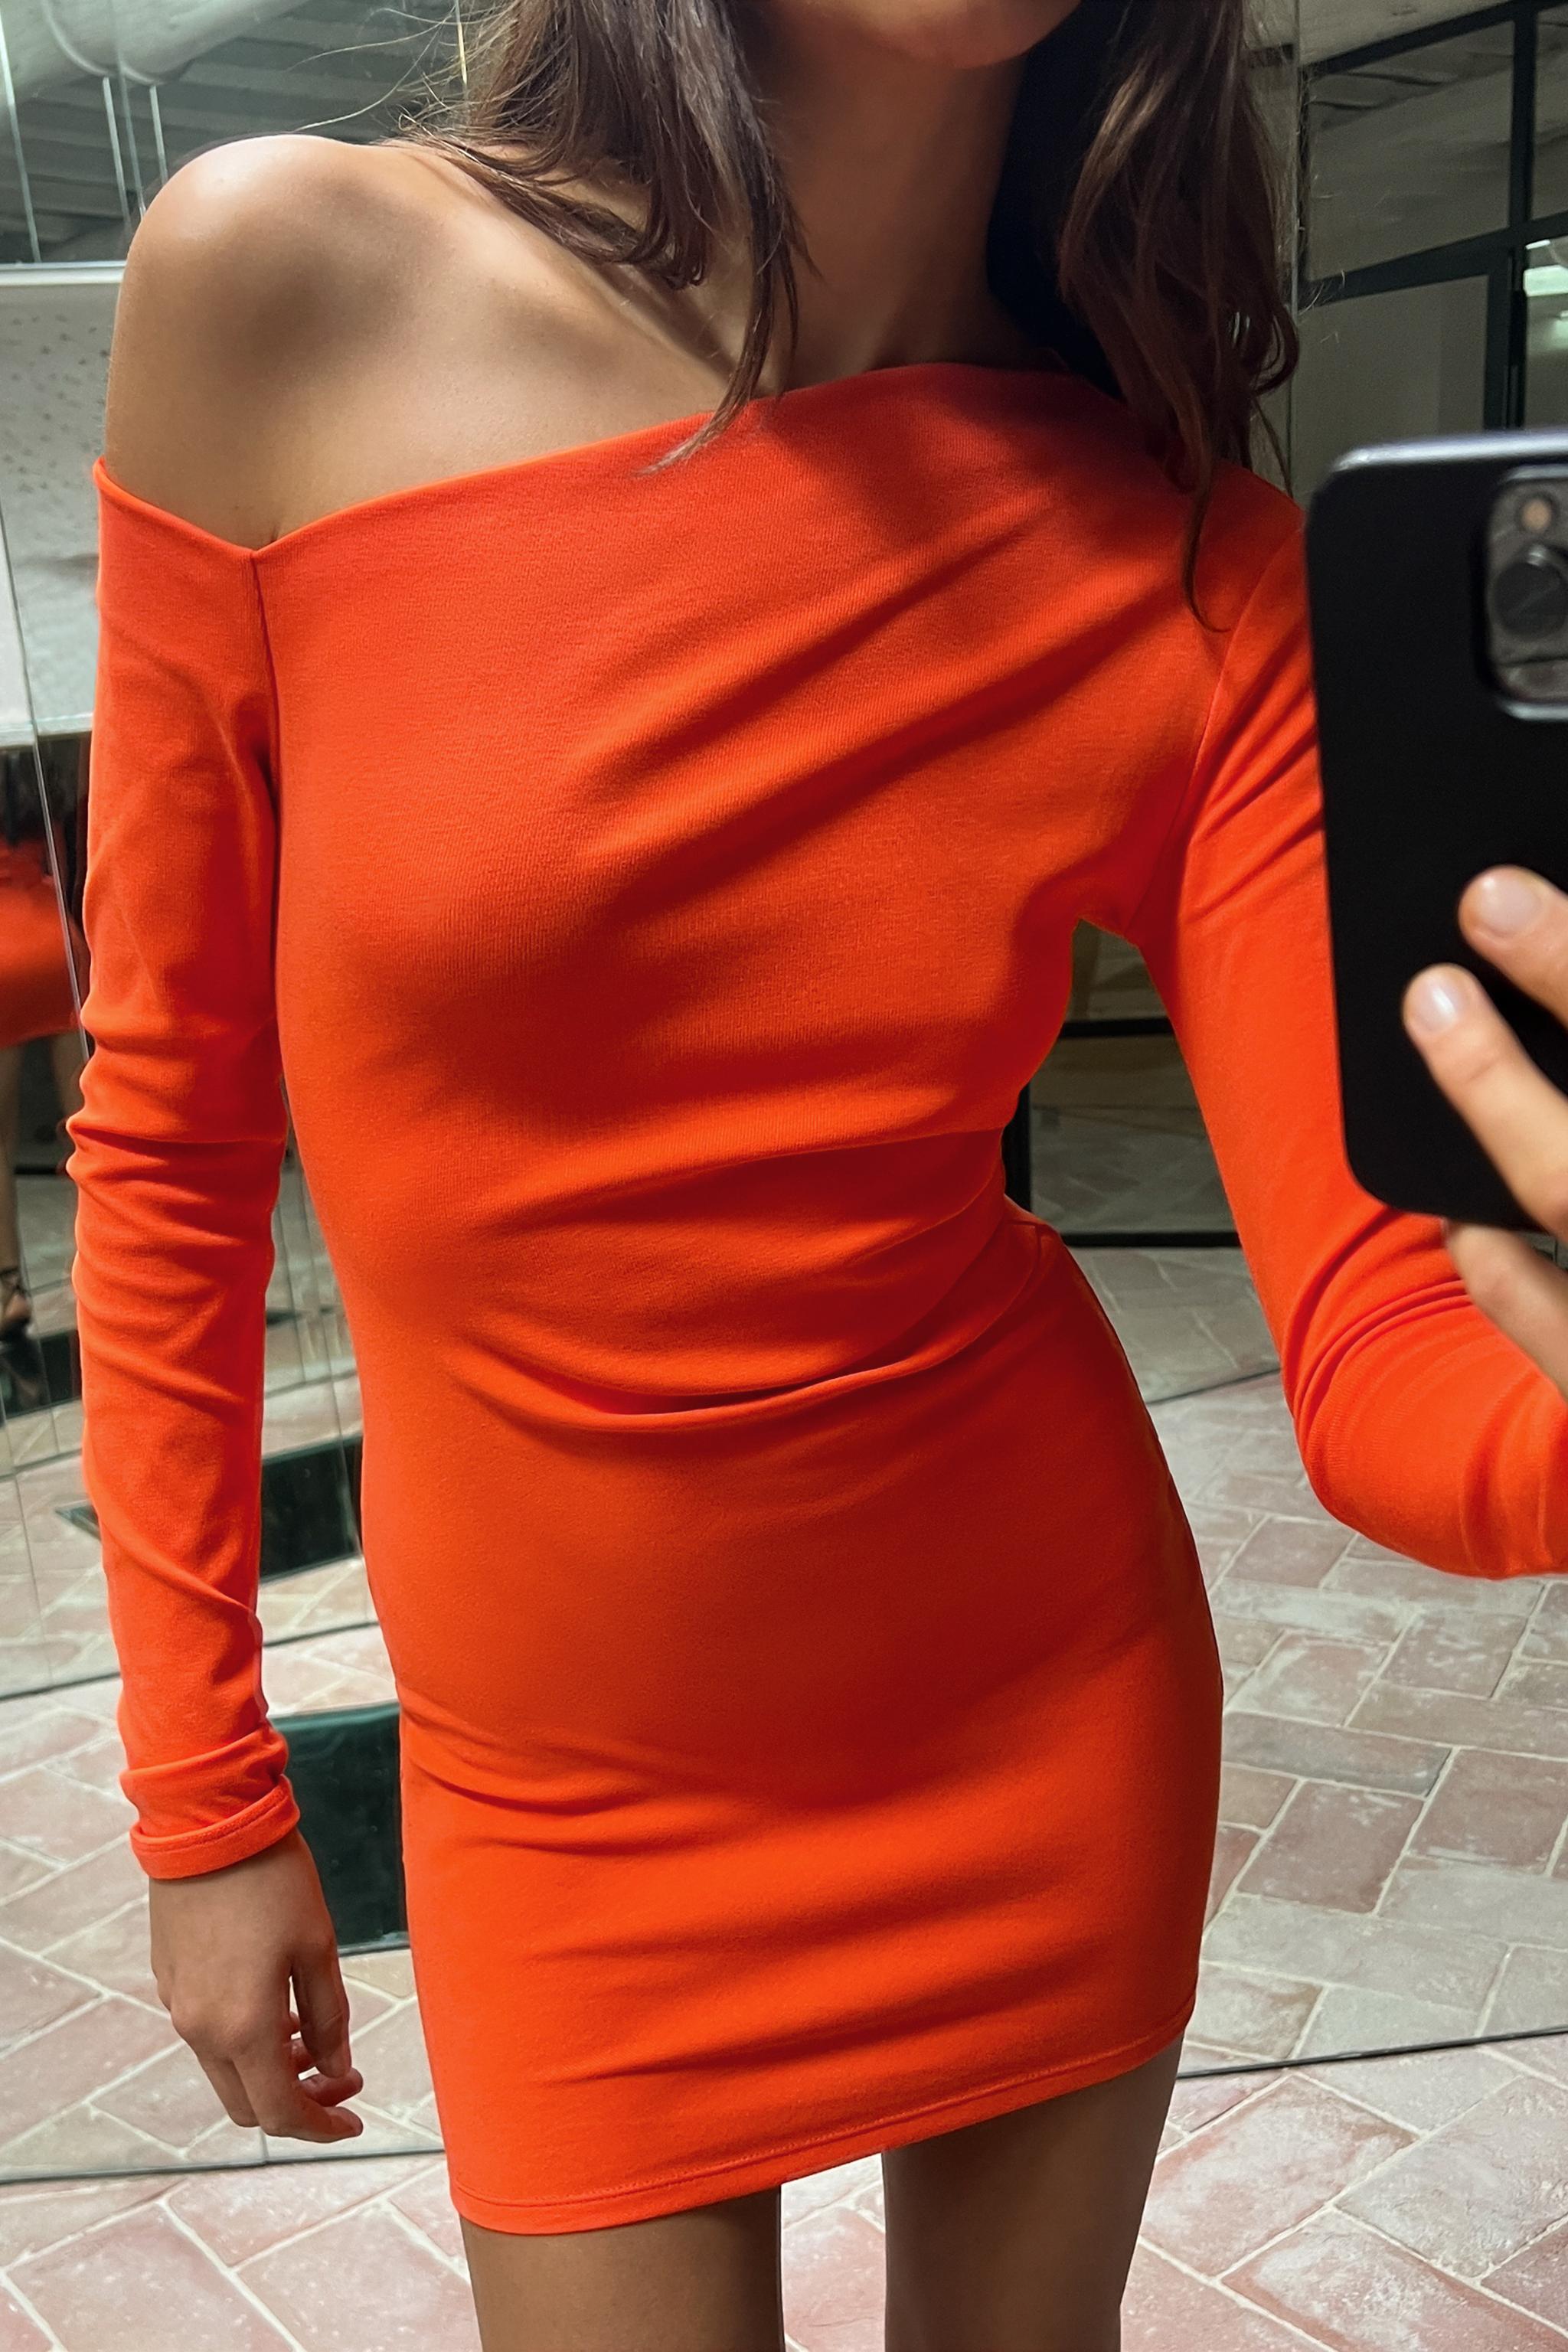 MODA: Zara tiene el traje naranja viral super favorecedor y rejuvenecedor